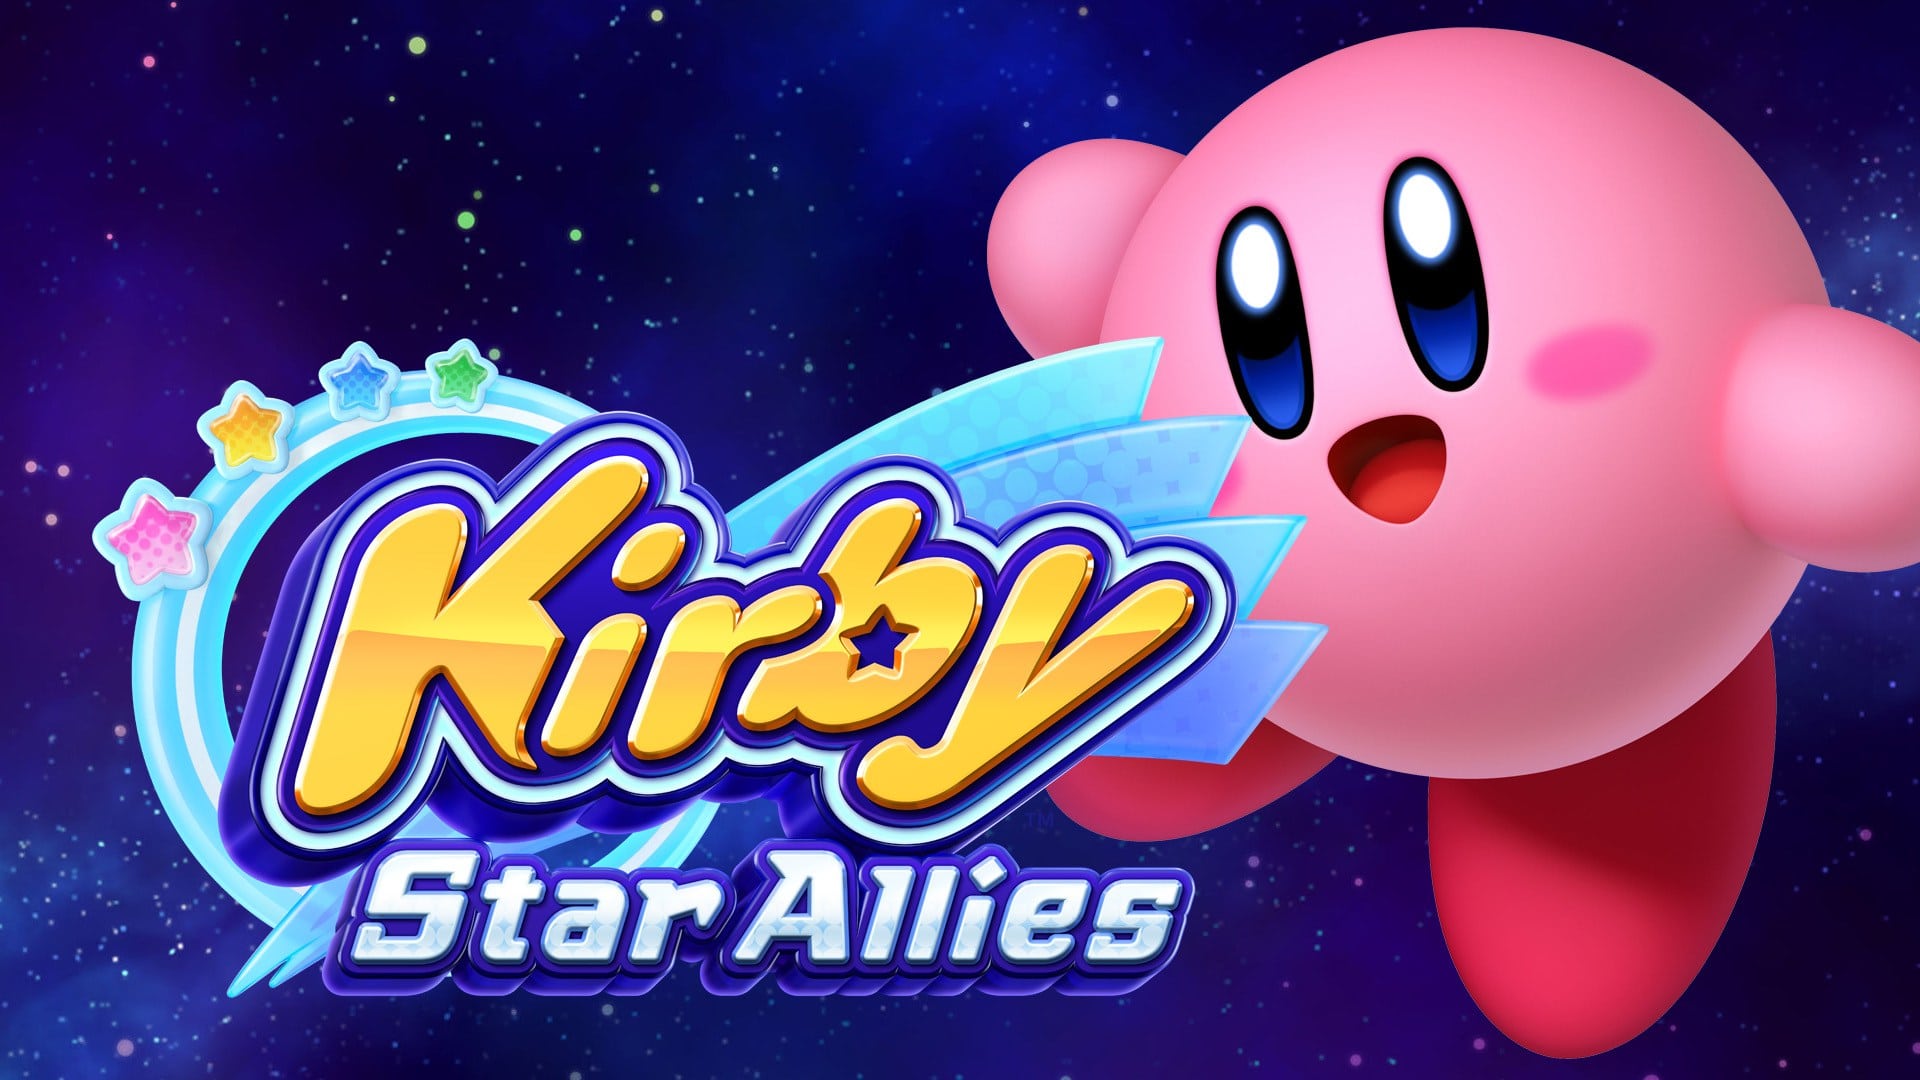 Update Kirby Star Allies this summer.